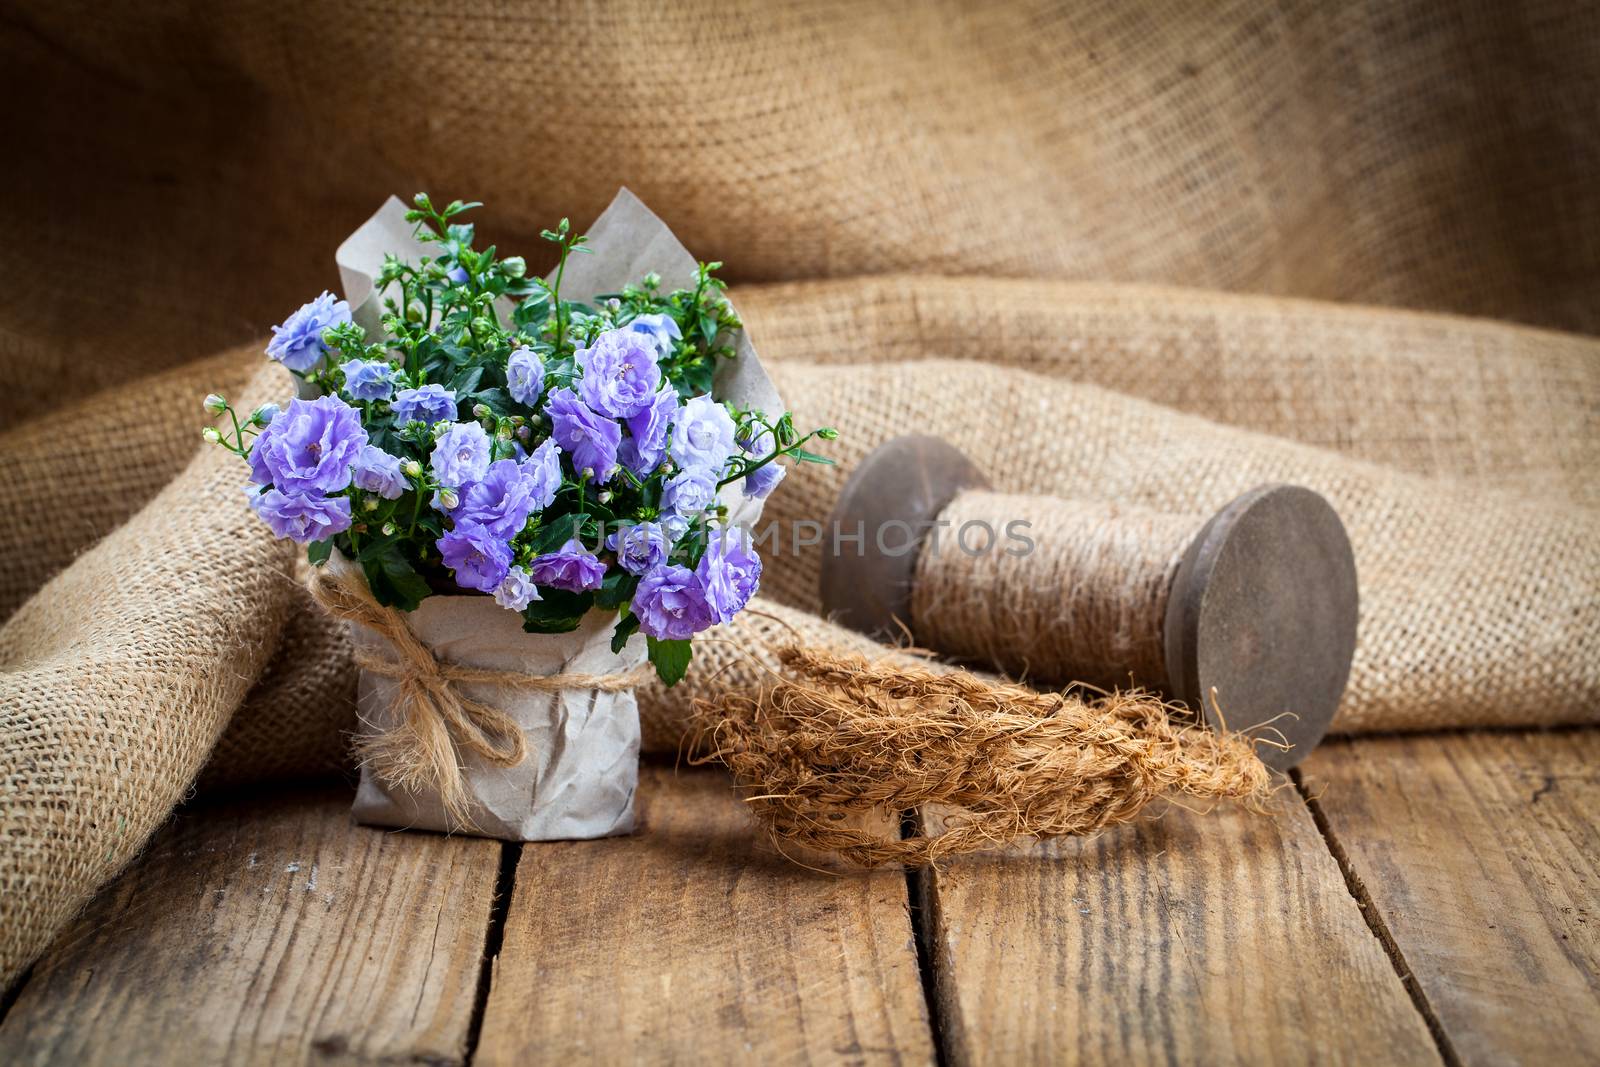 blue Campanula terry flowers in paper packaging, on wooden backg by motorolka